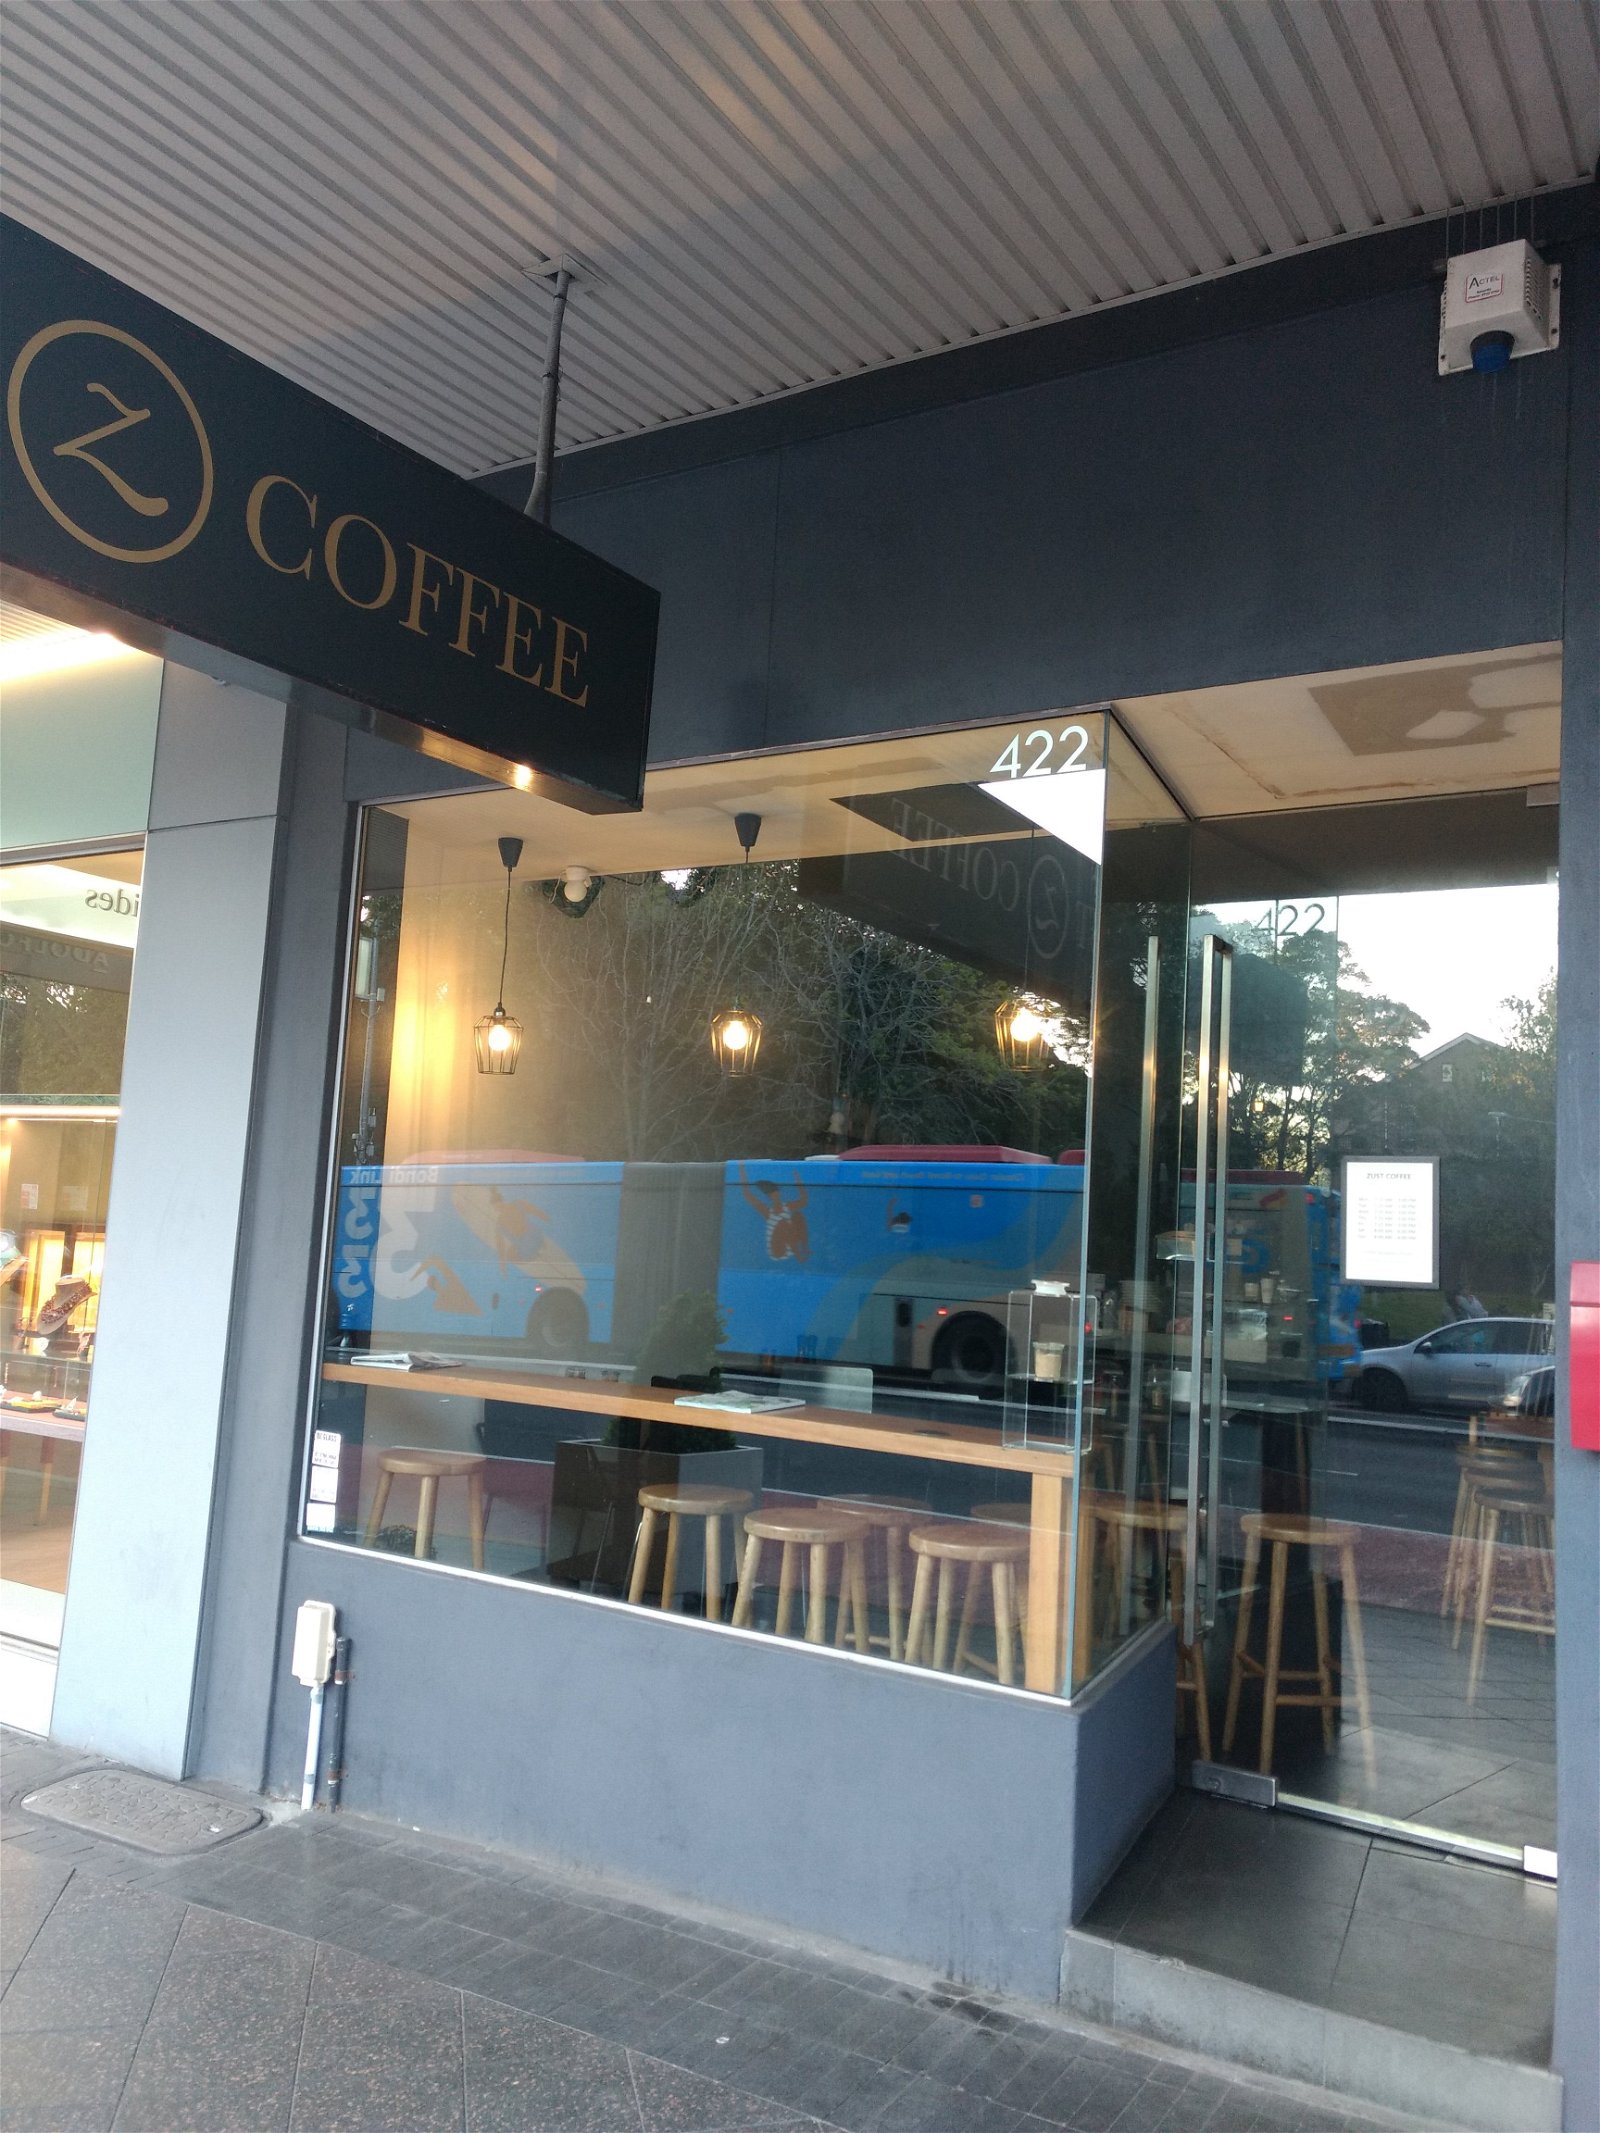 Zust coffee - Tourism Gold Coast